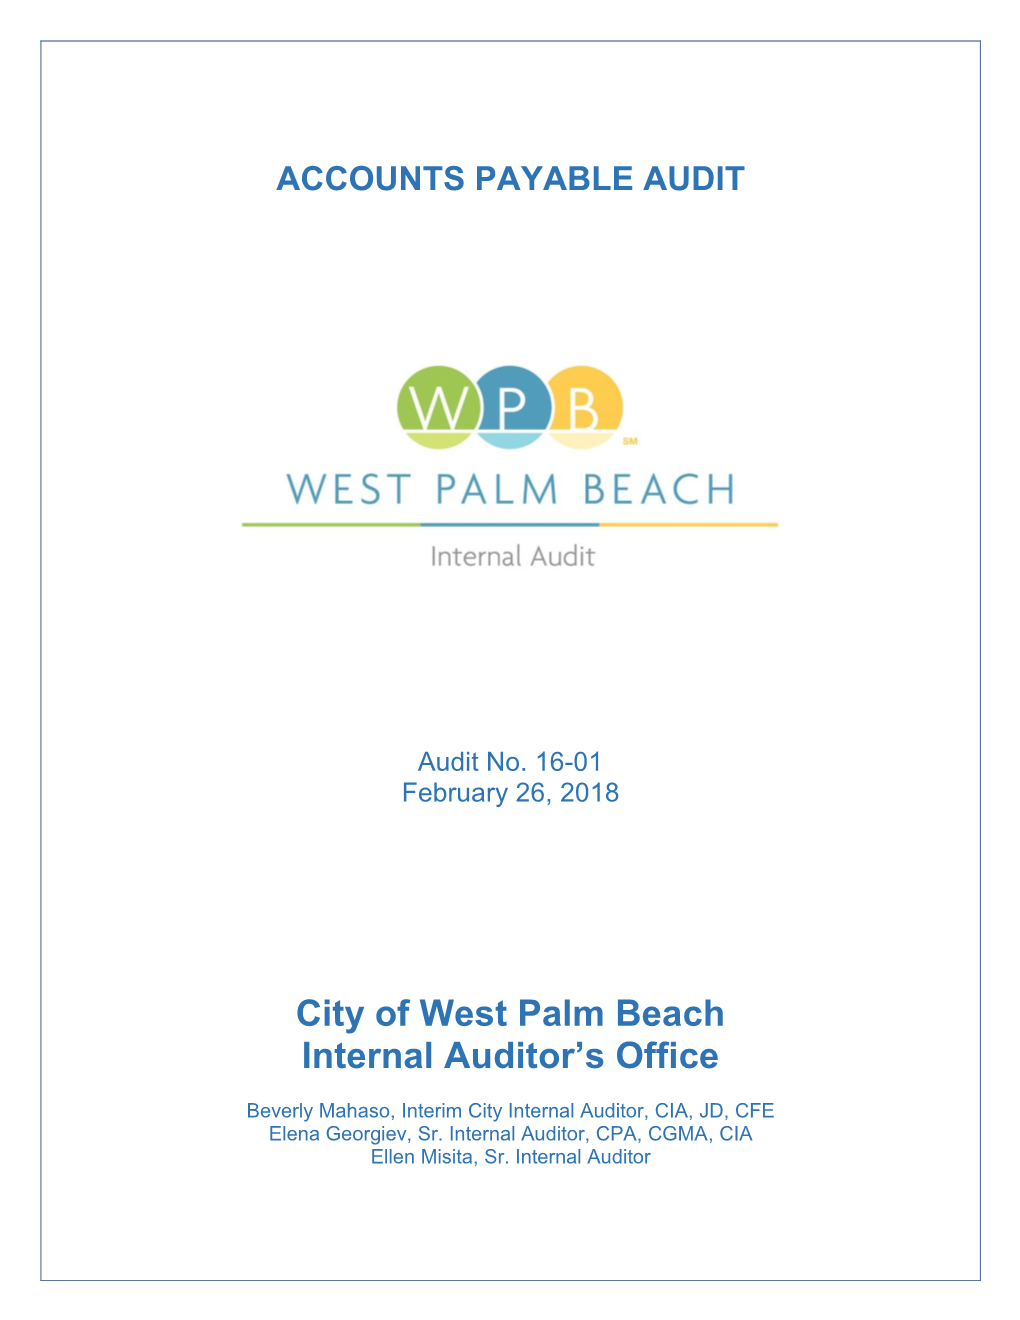 Accounts Payable Audit